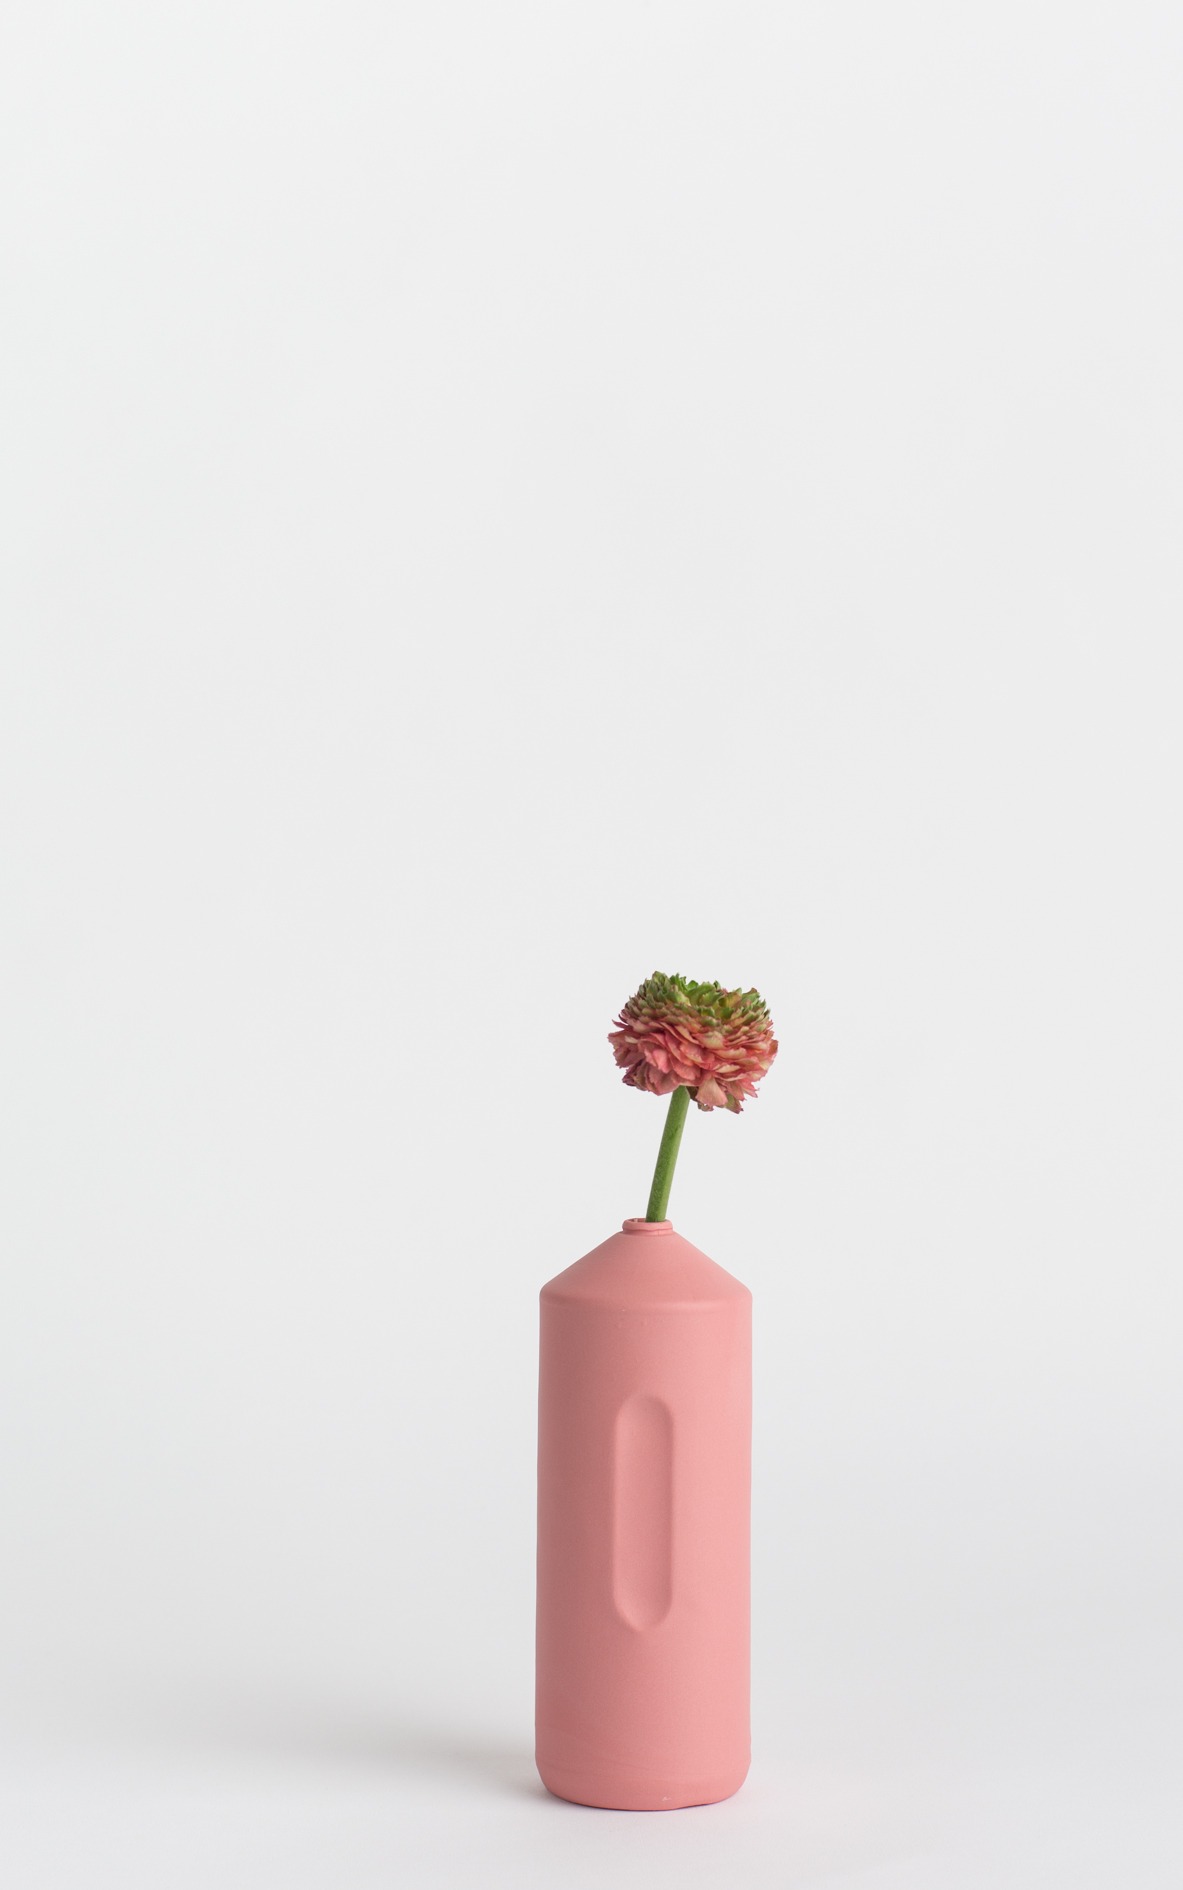 bottle vase #2 old red with flower